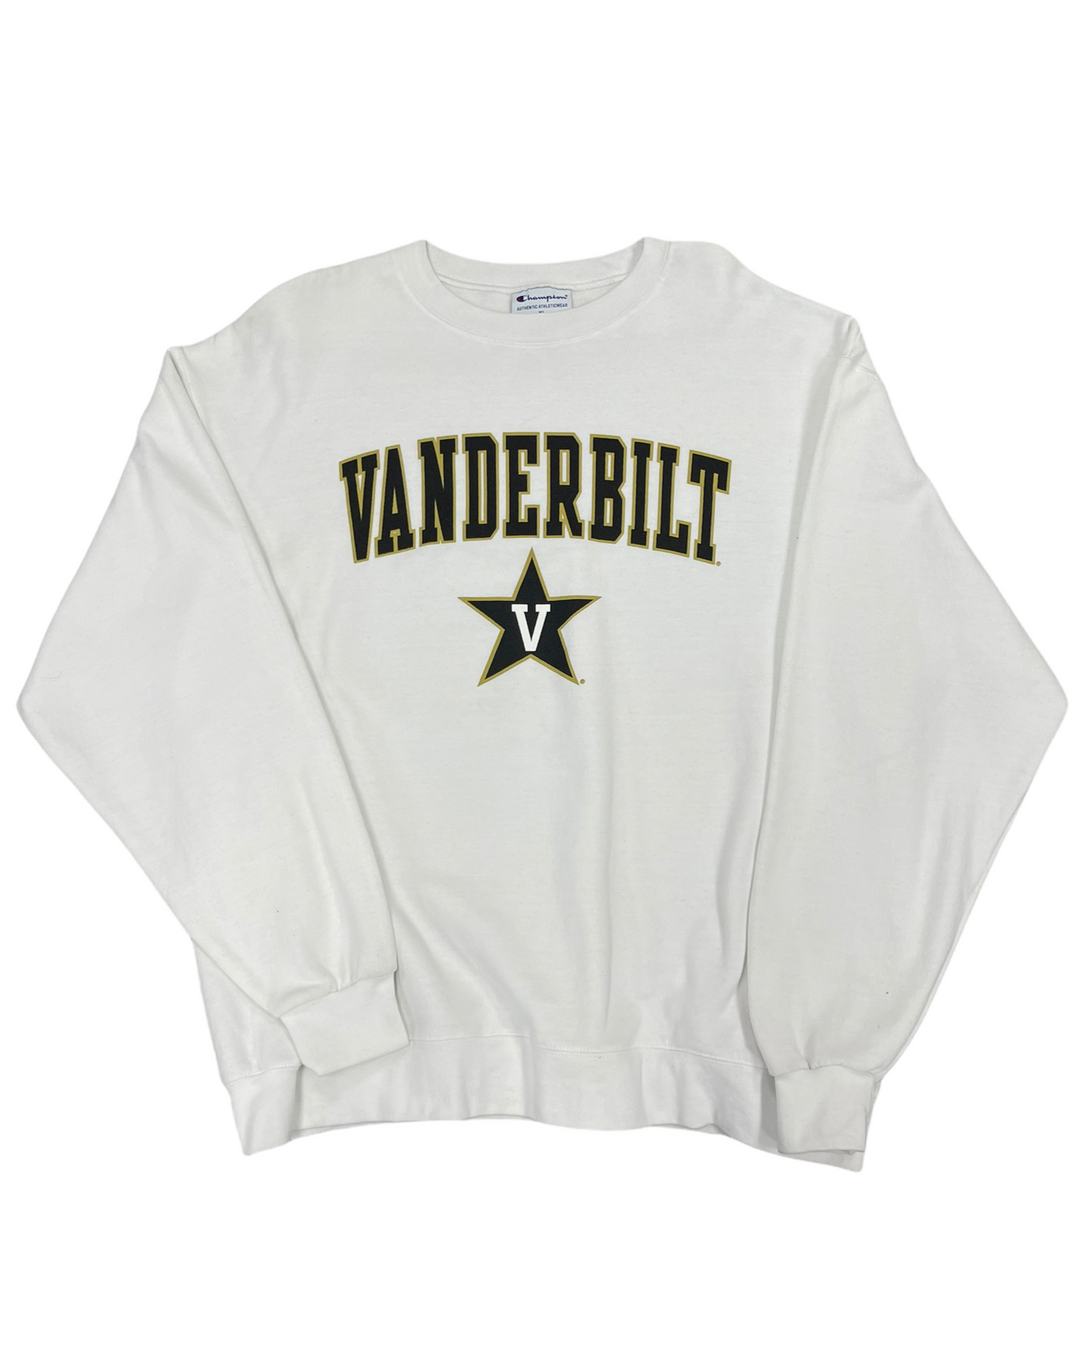 Vanderbilt Vintage Crewneck